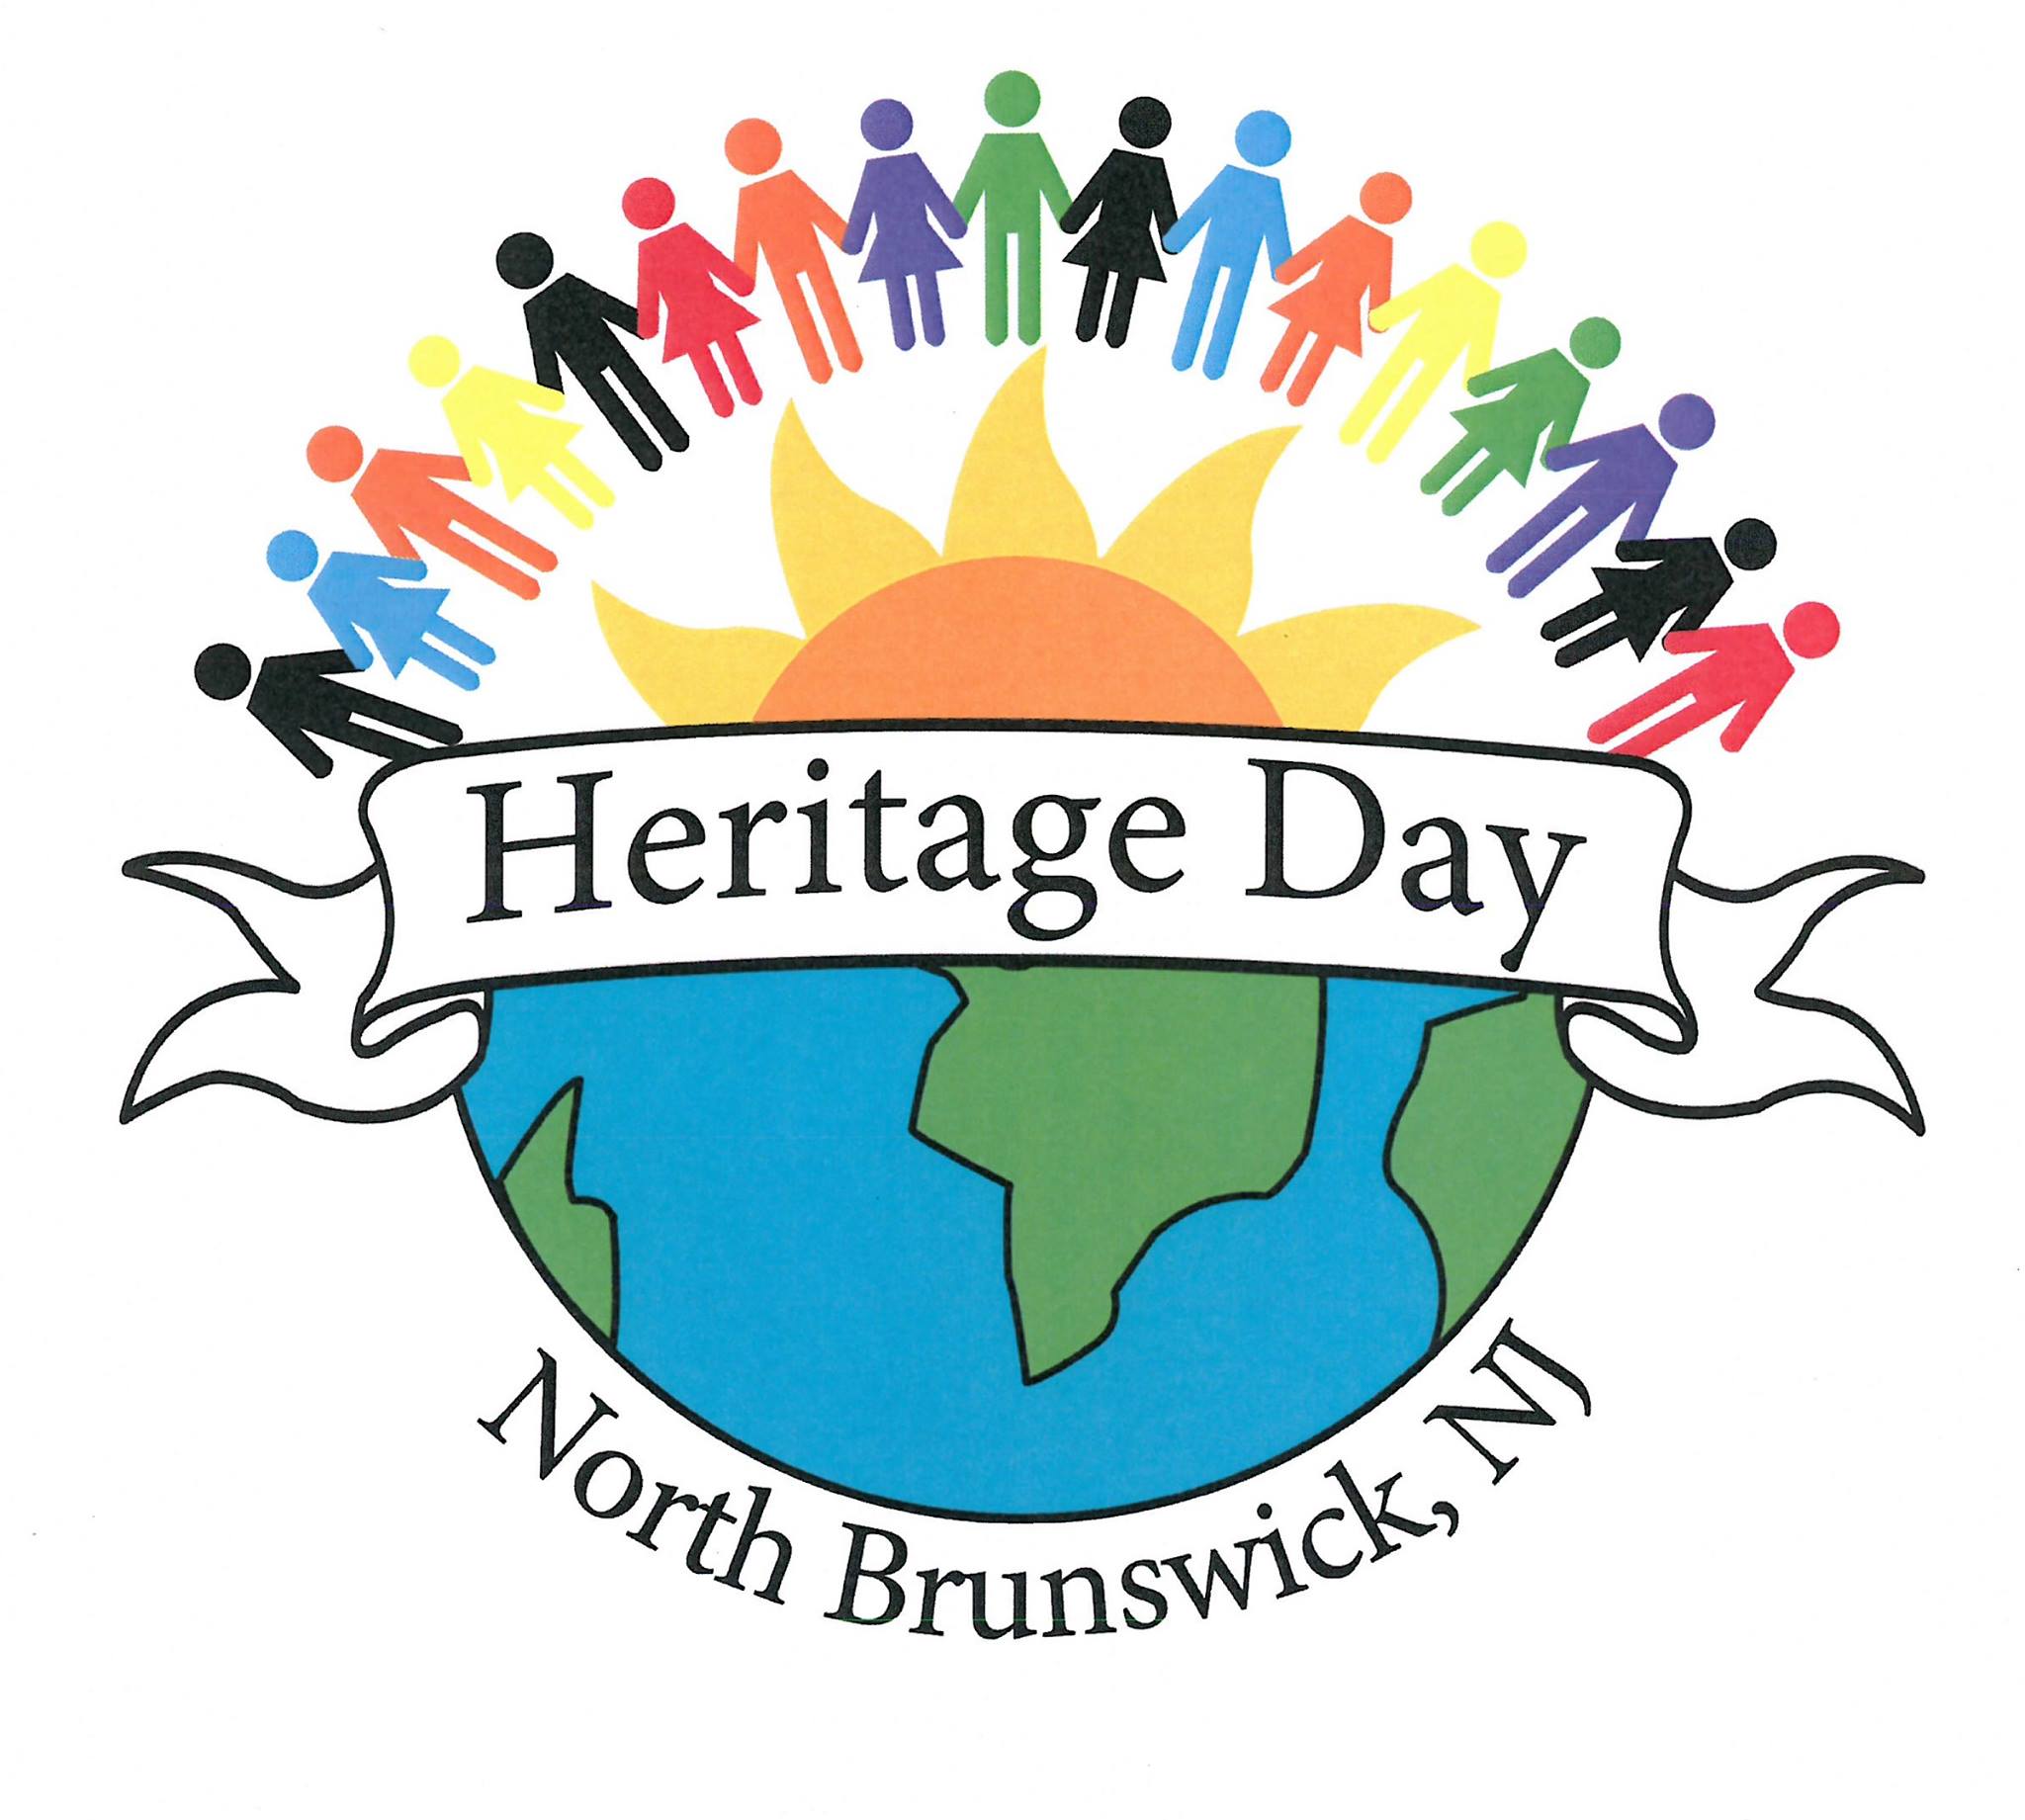 North Brunswick 40th Annual Heritage Day Township of North Brunswick